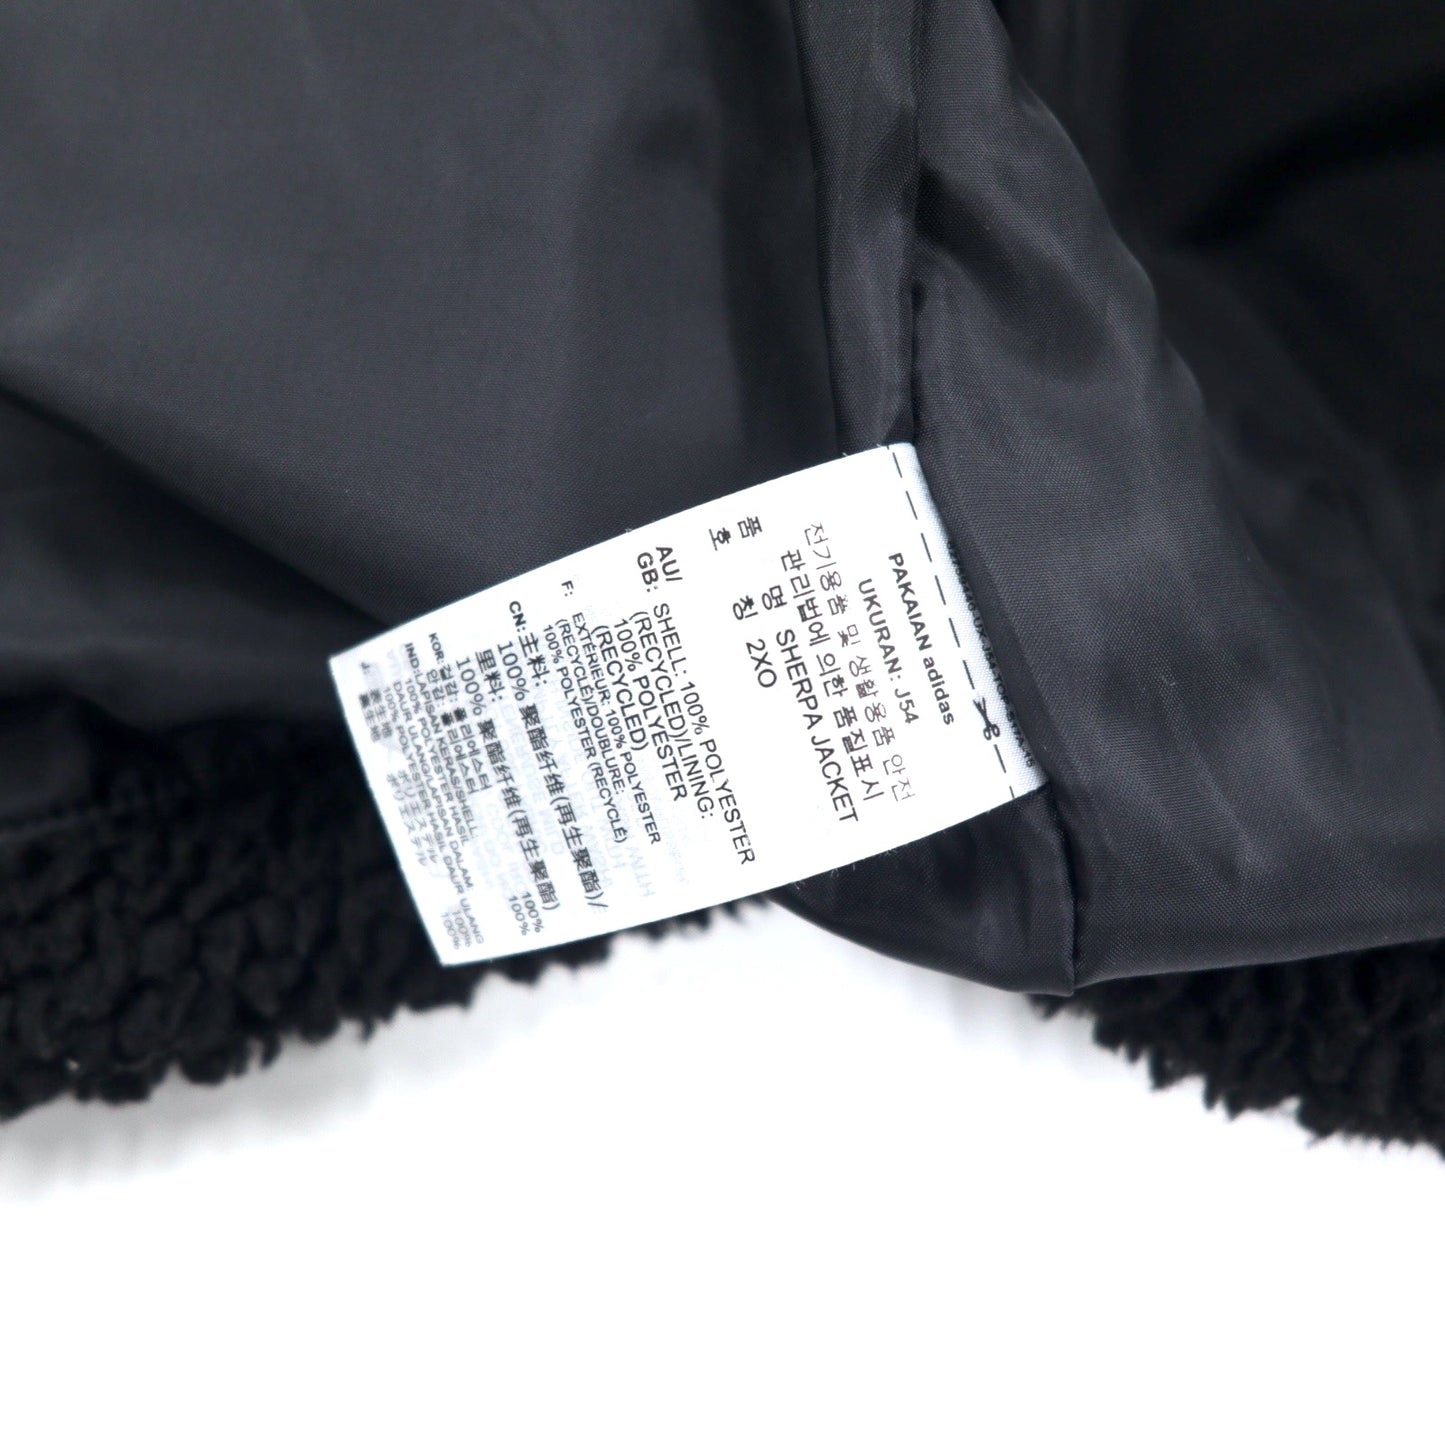 adidas Originals ビッグトレフォイル シェルパ フリースジャケット 2XO ブラック ポリエステル U SHERPA JACKET BIG TRF HC0325